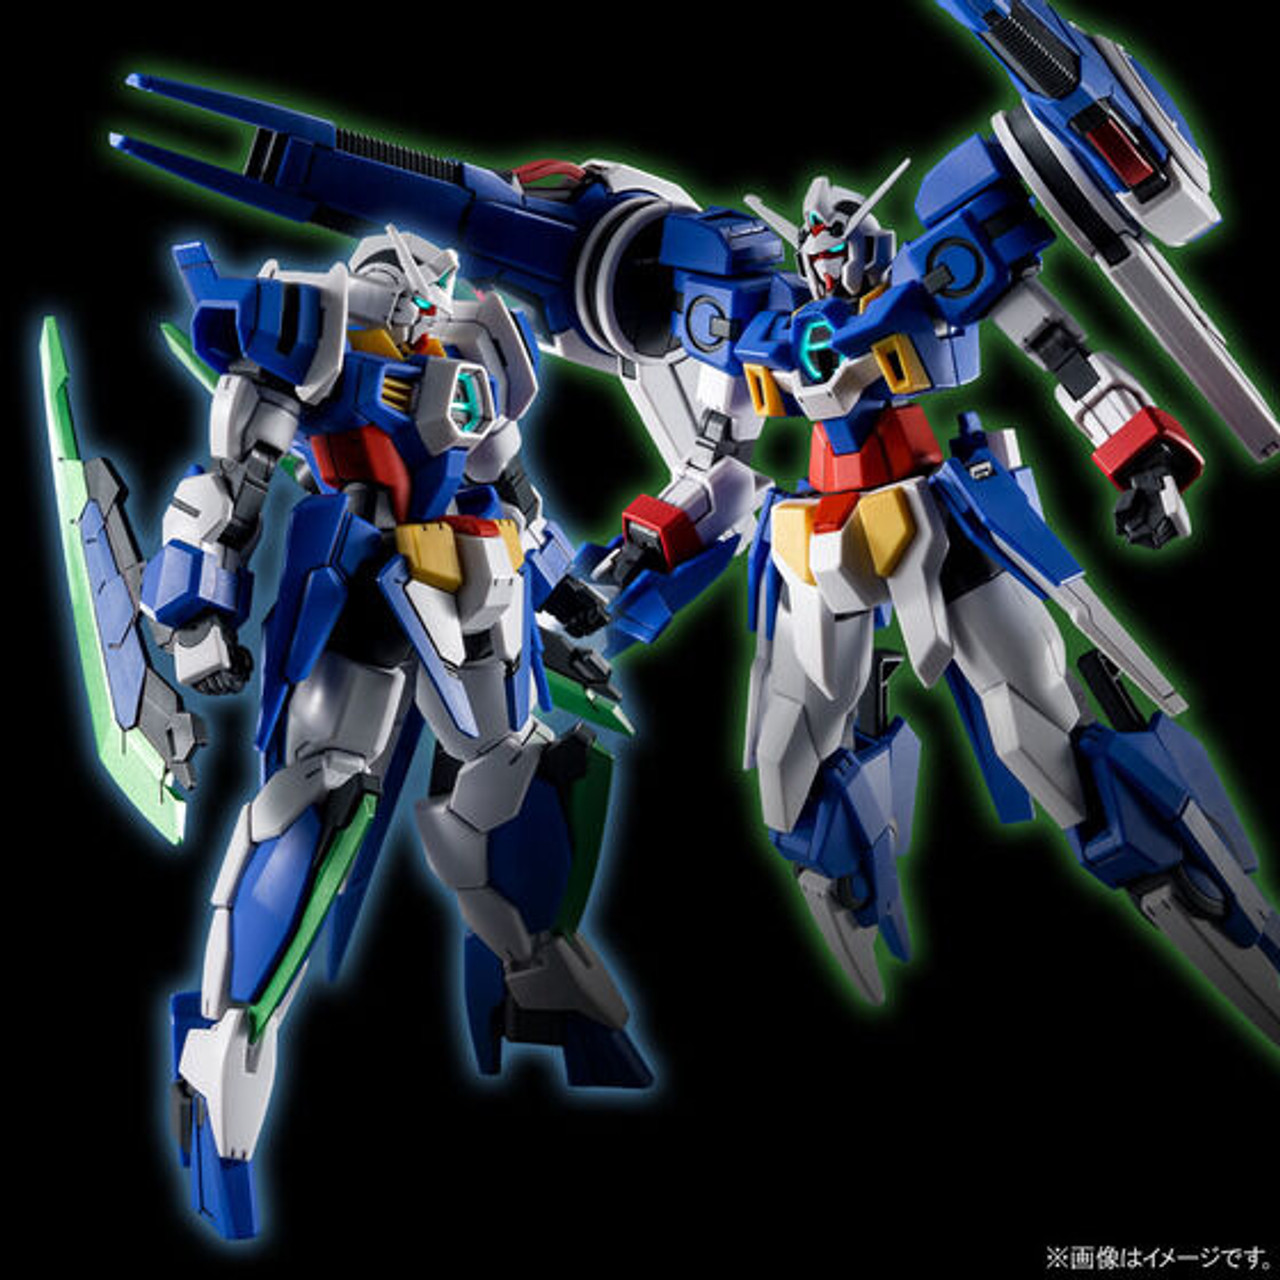 HG 1/144 Gundam AGE-1 Razor & Gundam AGE-2 Ultimate Set pre-order limited JAPAN 